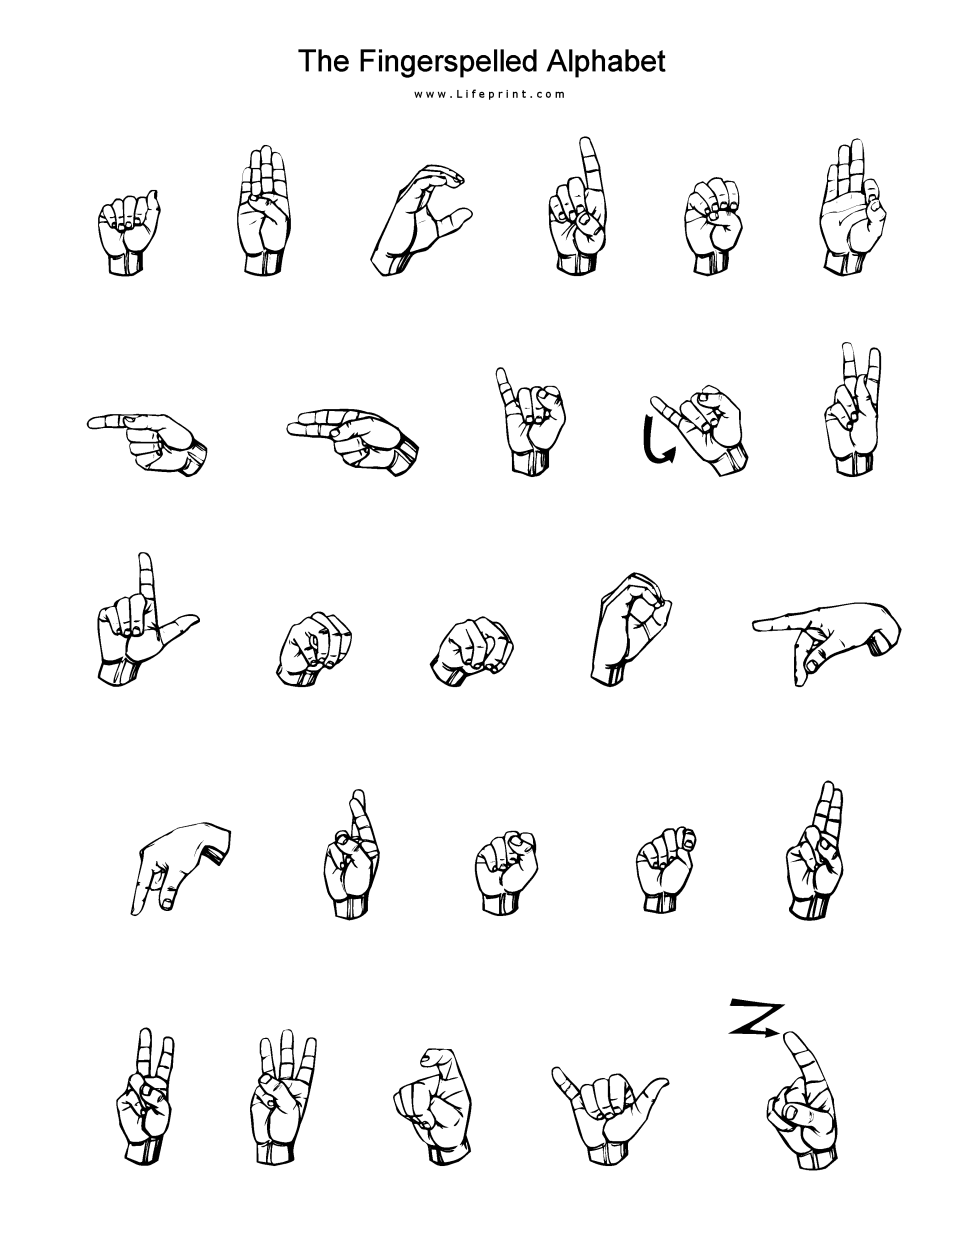 deaf sign language alphabet